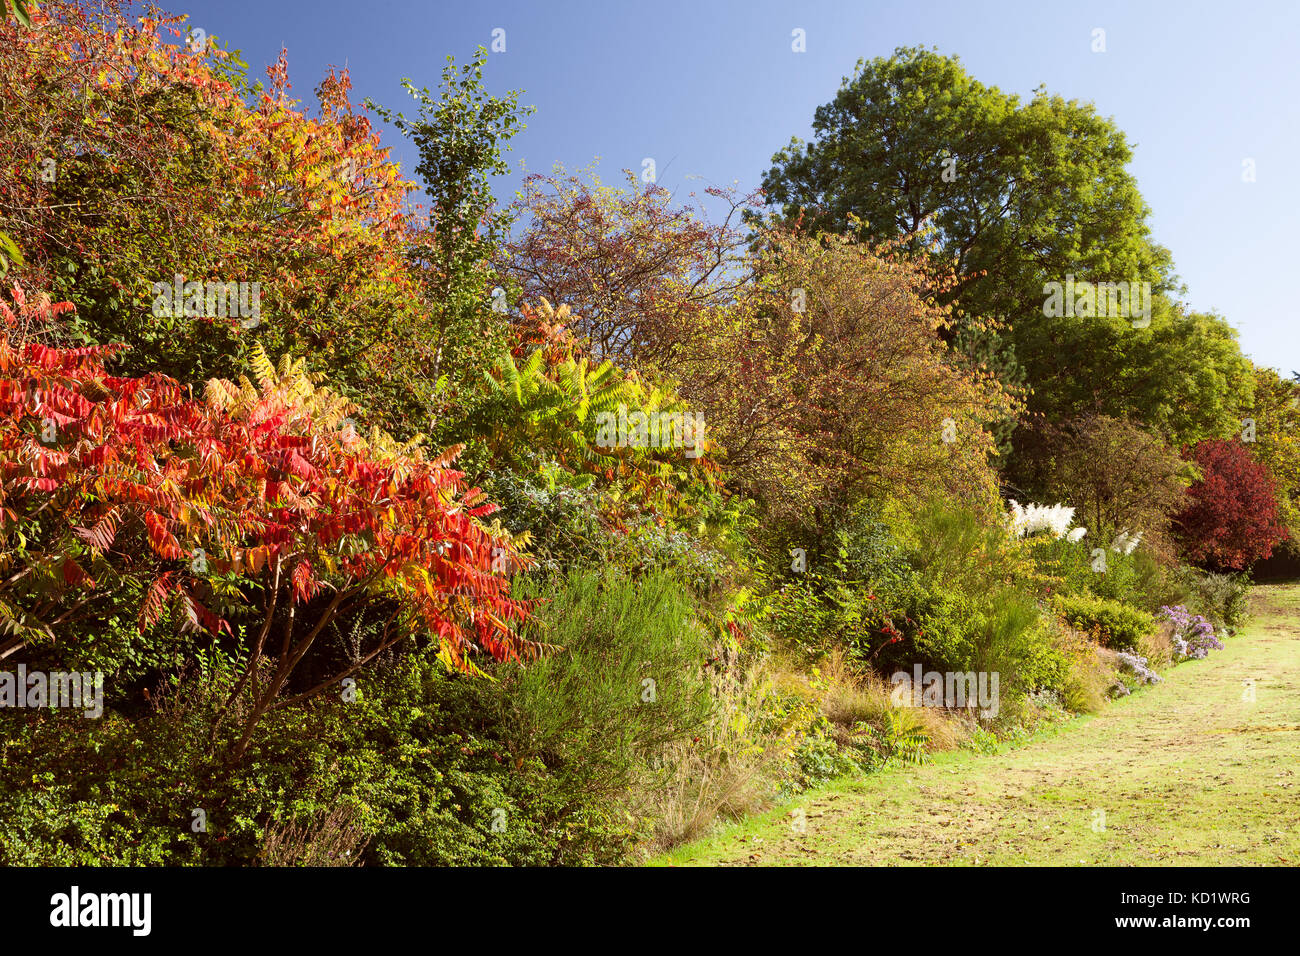 Kingsway gardens, Scunthorpe, Lincolnshire du nord. octobre 2017. Banque D'Images